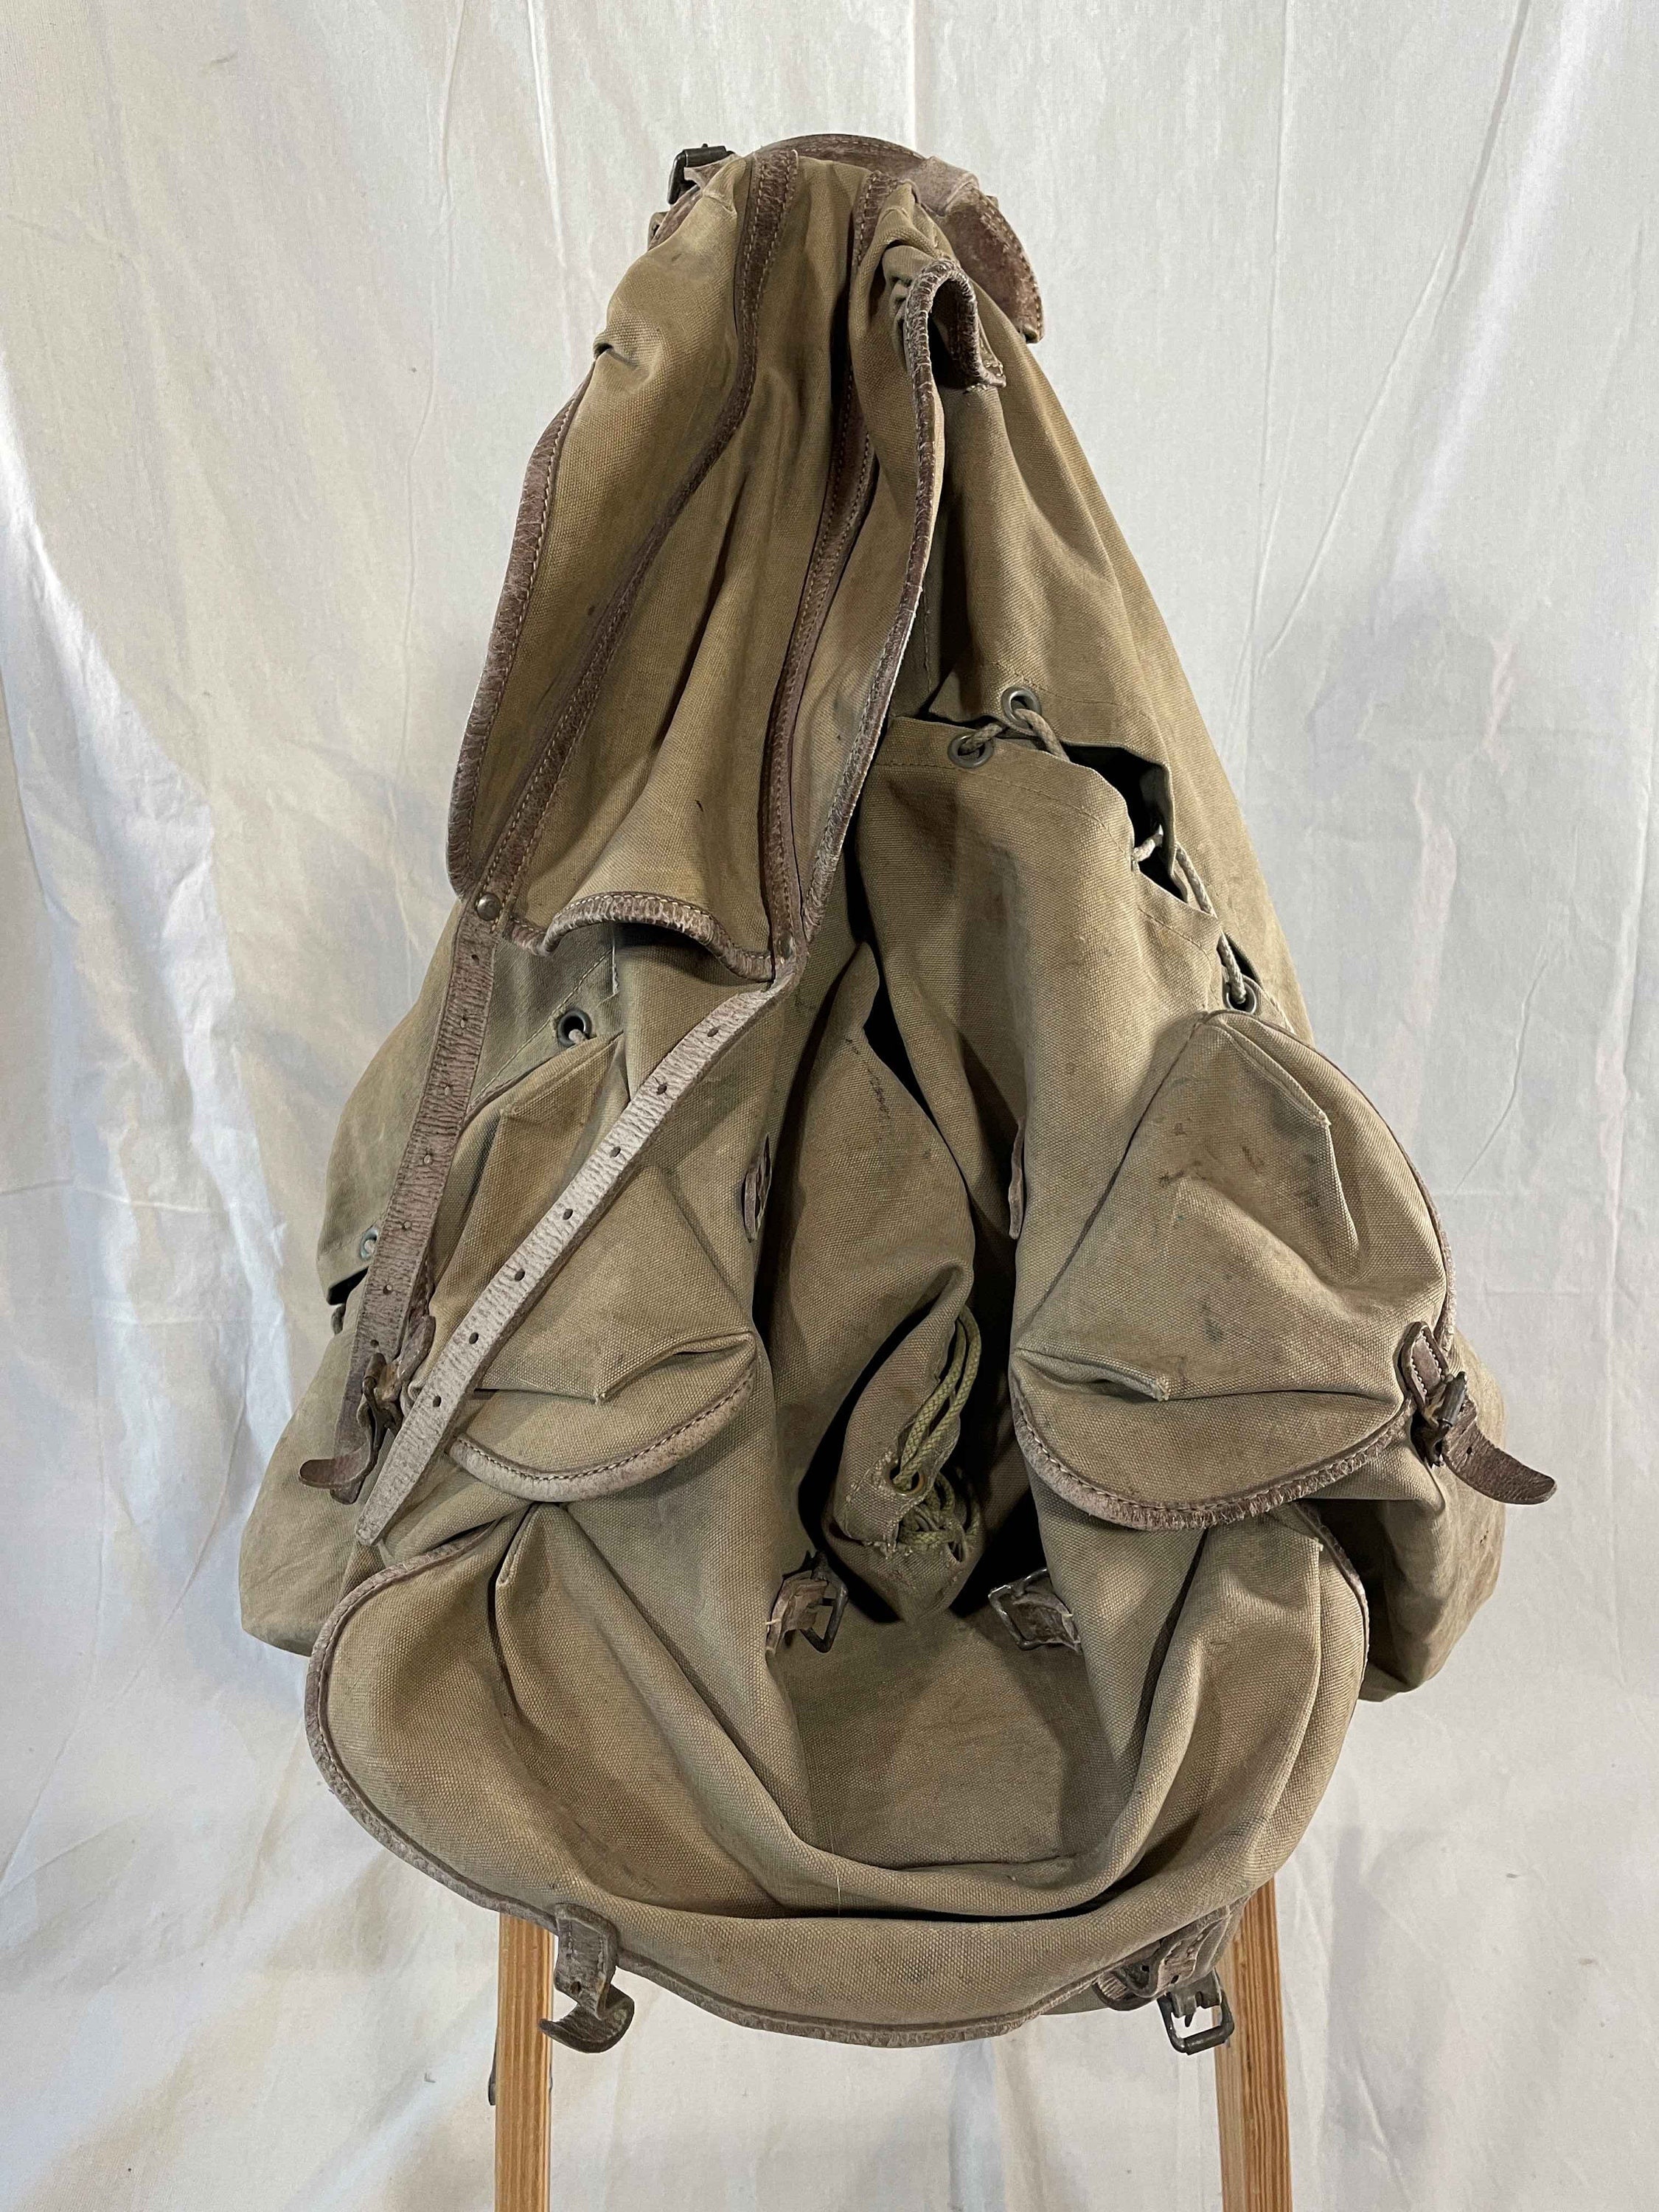 Bergans Of Norway Military Internal Frame Backpack Rucksack Green | eBay